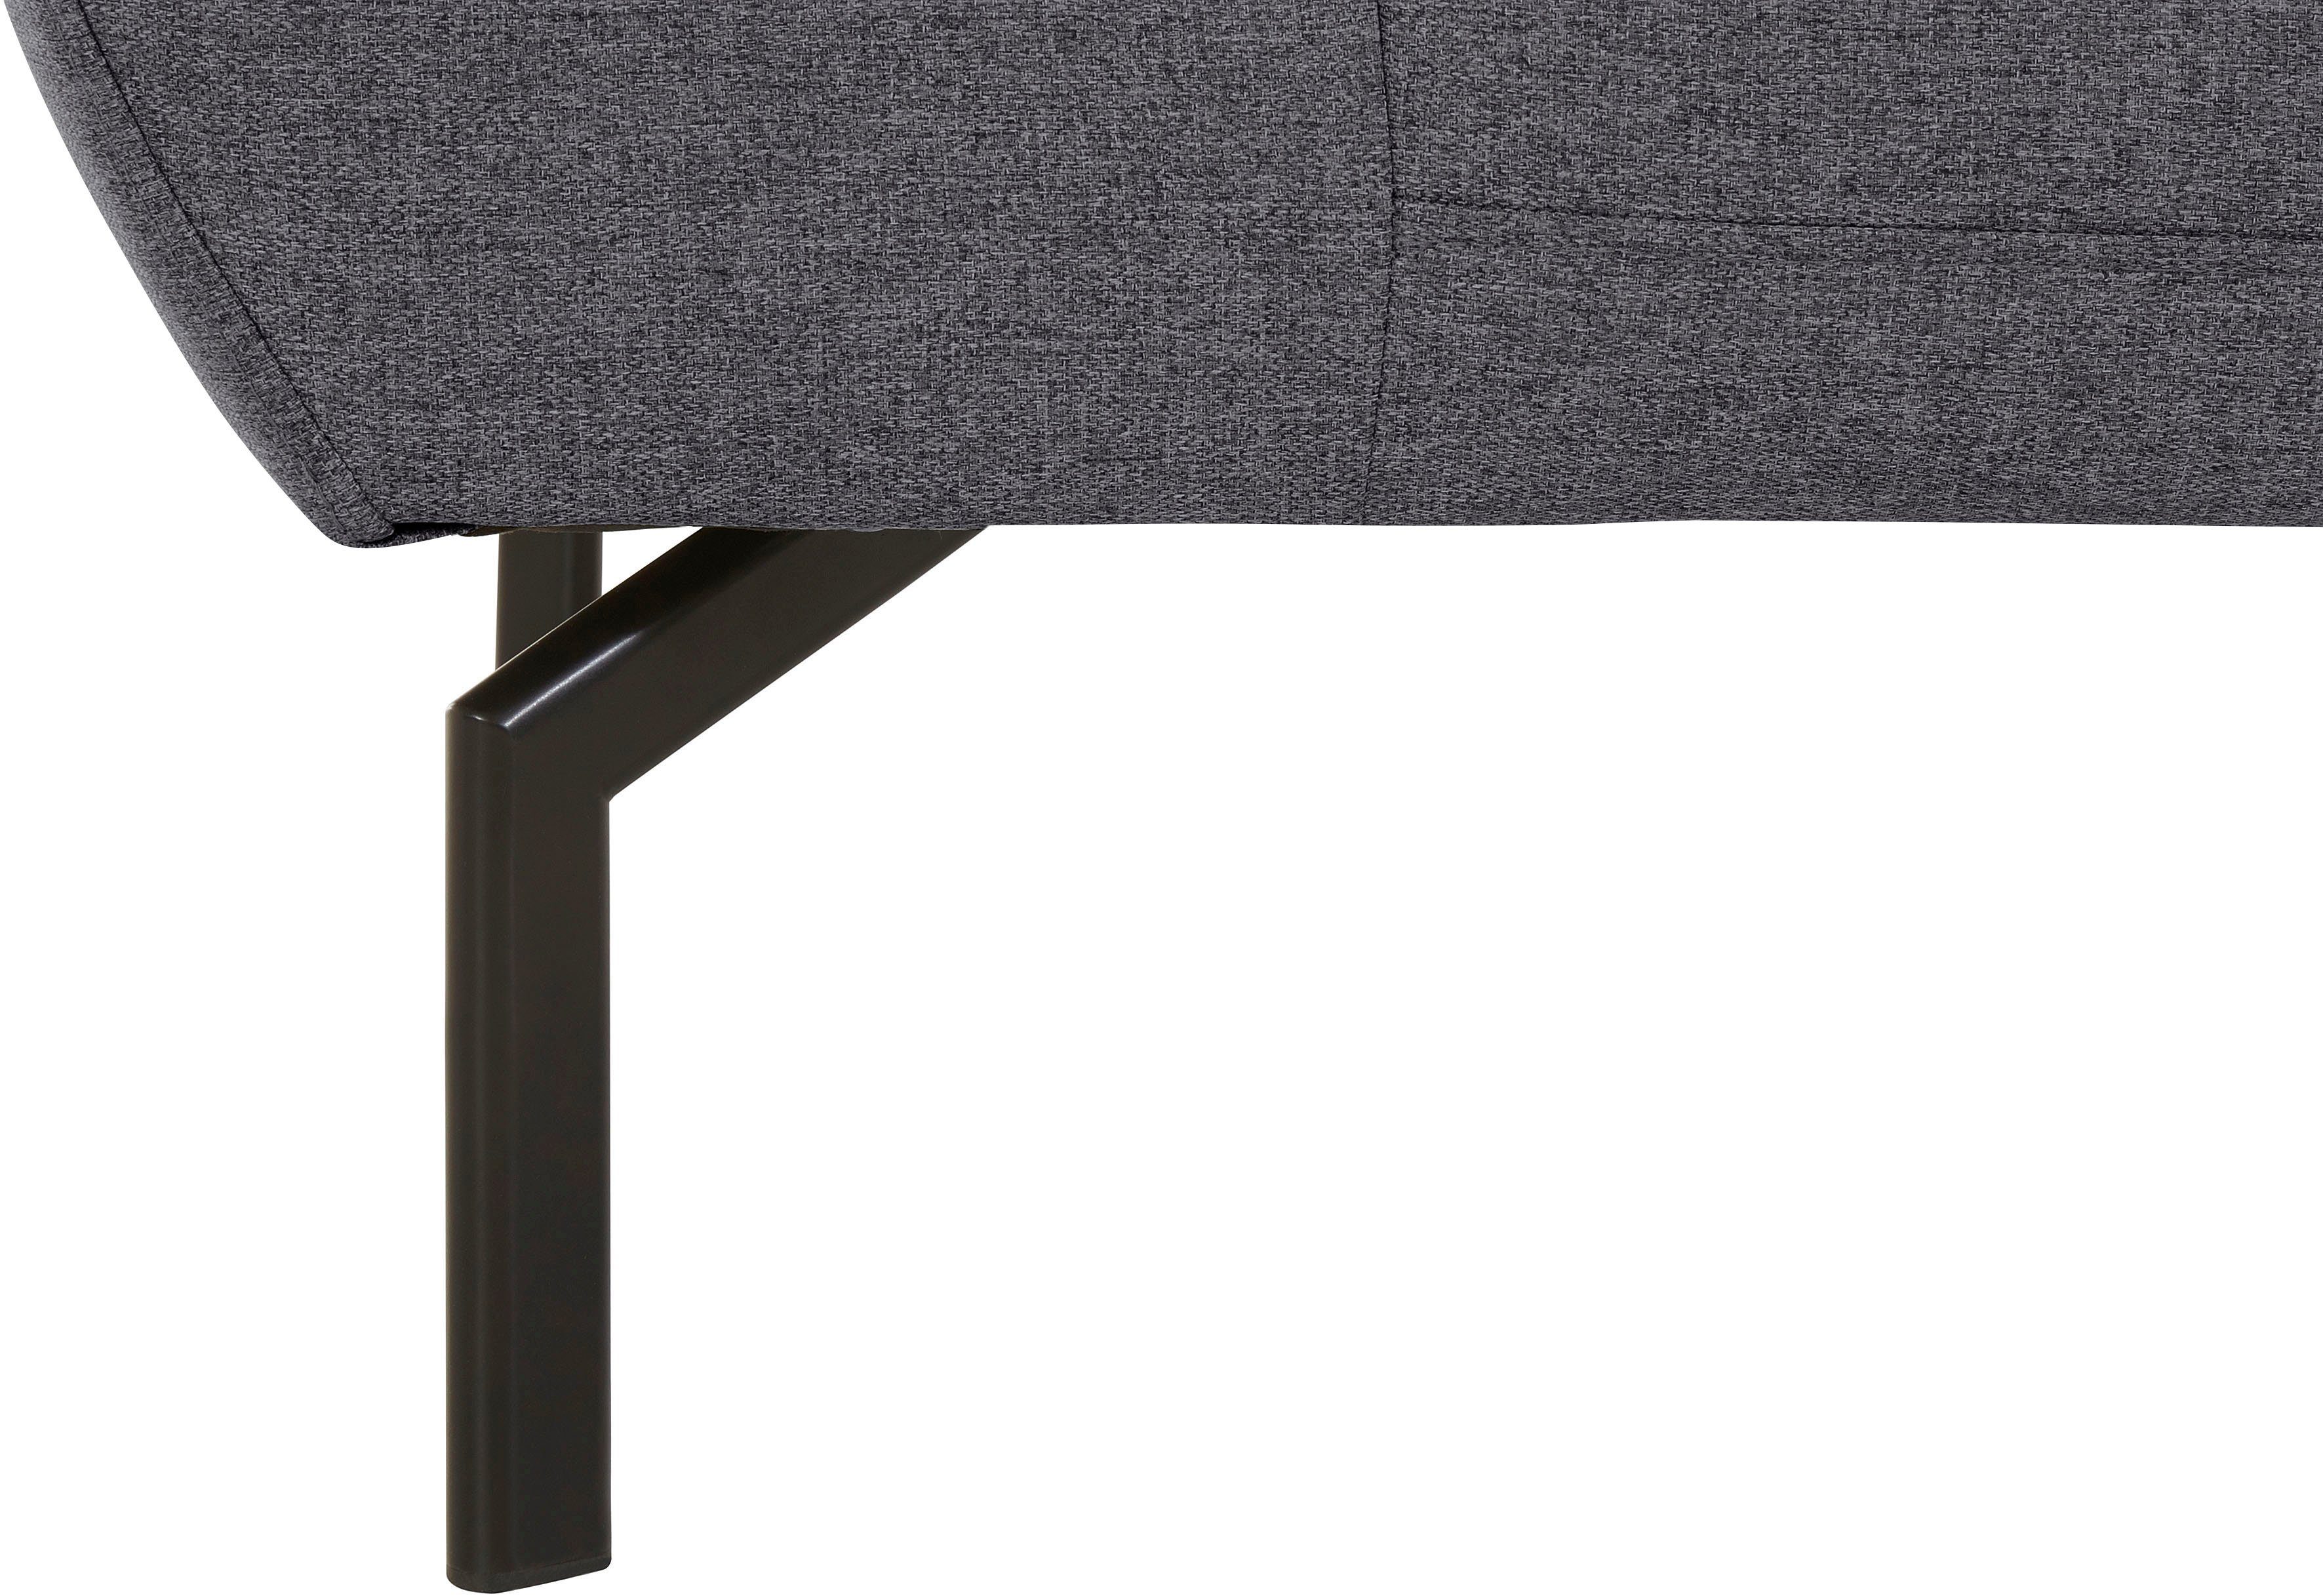 Places of Trapino Style Luxus-Microfaser mit Rückenverstellung, in Lederoptik Sessel wahlweise Luxus